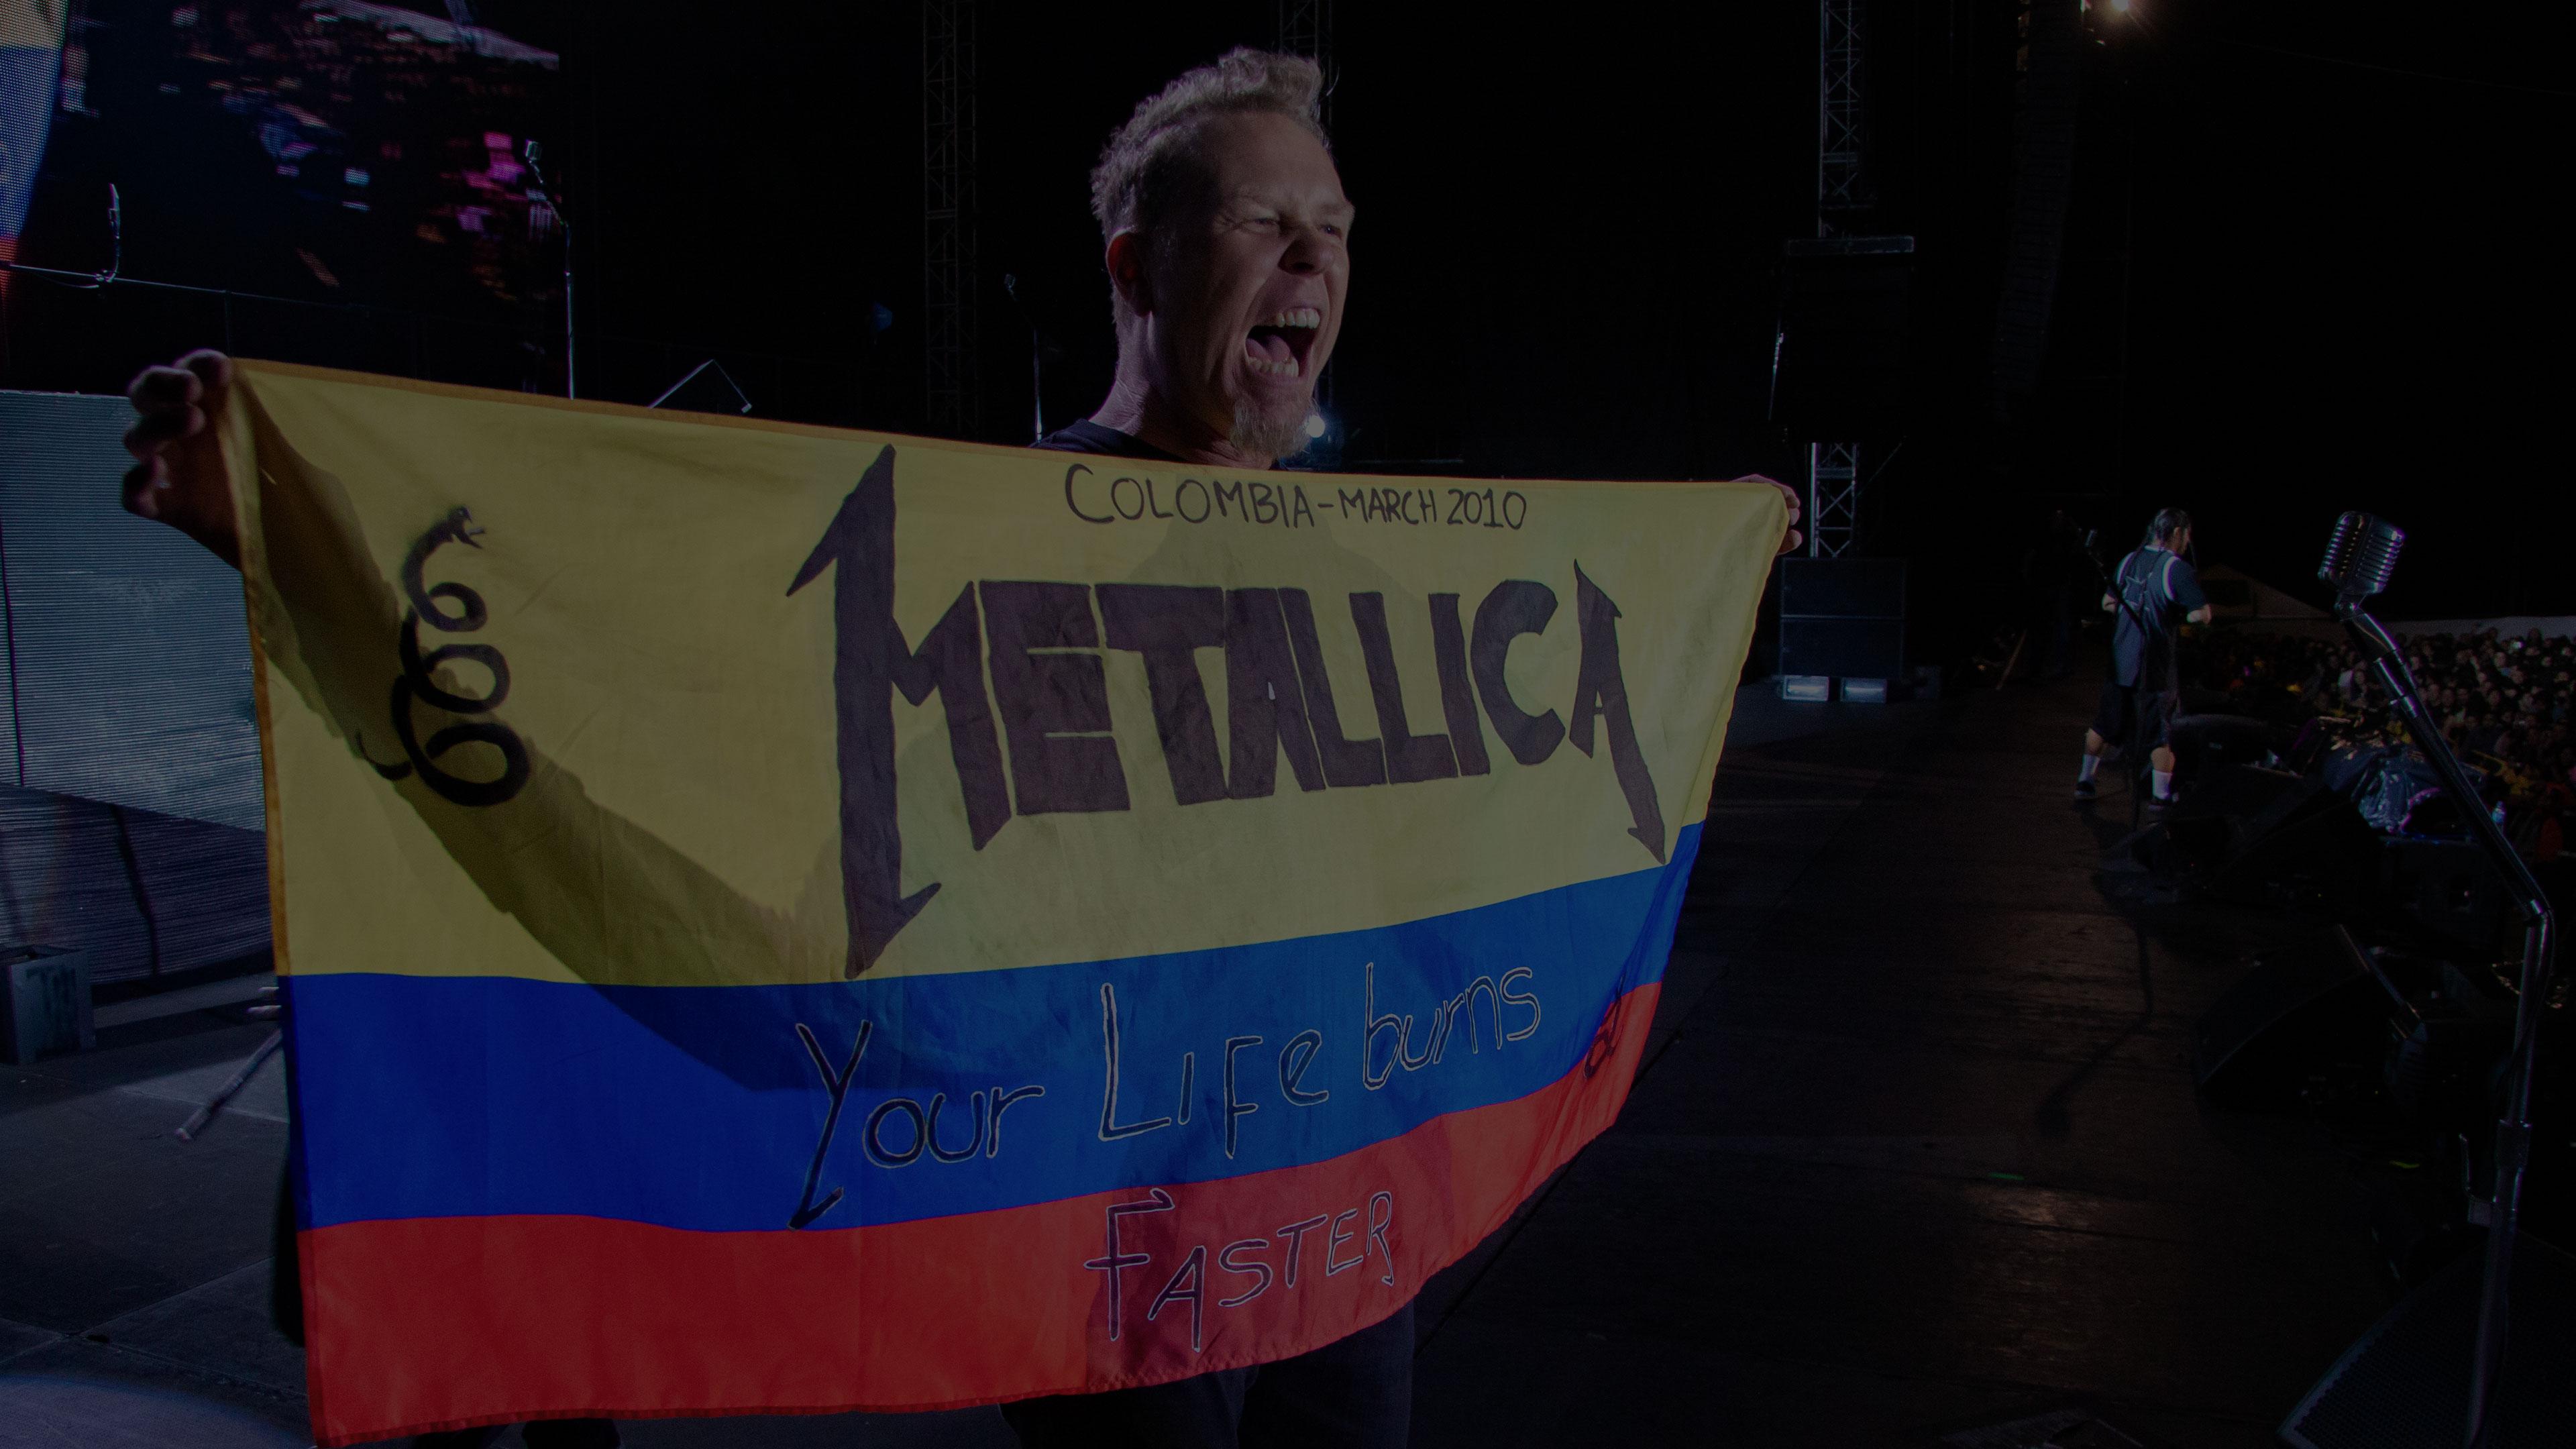 Metallica at Parque Simón Bolívar in Bogotá, Colombia on March 10, 2010